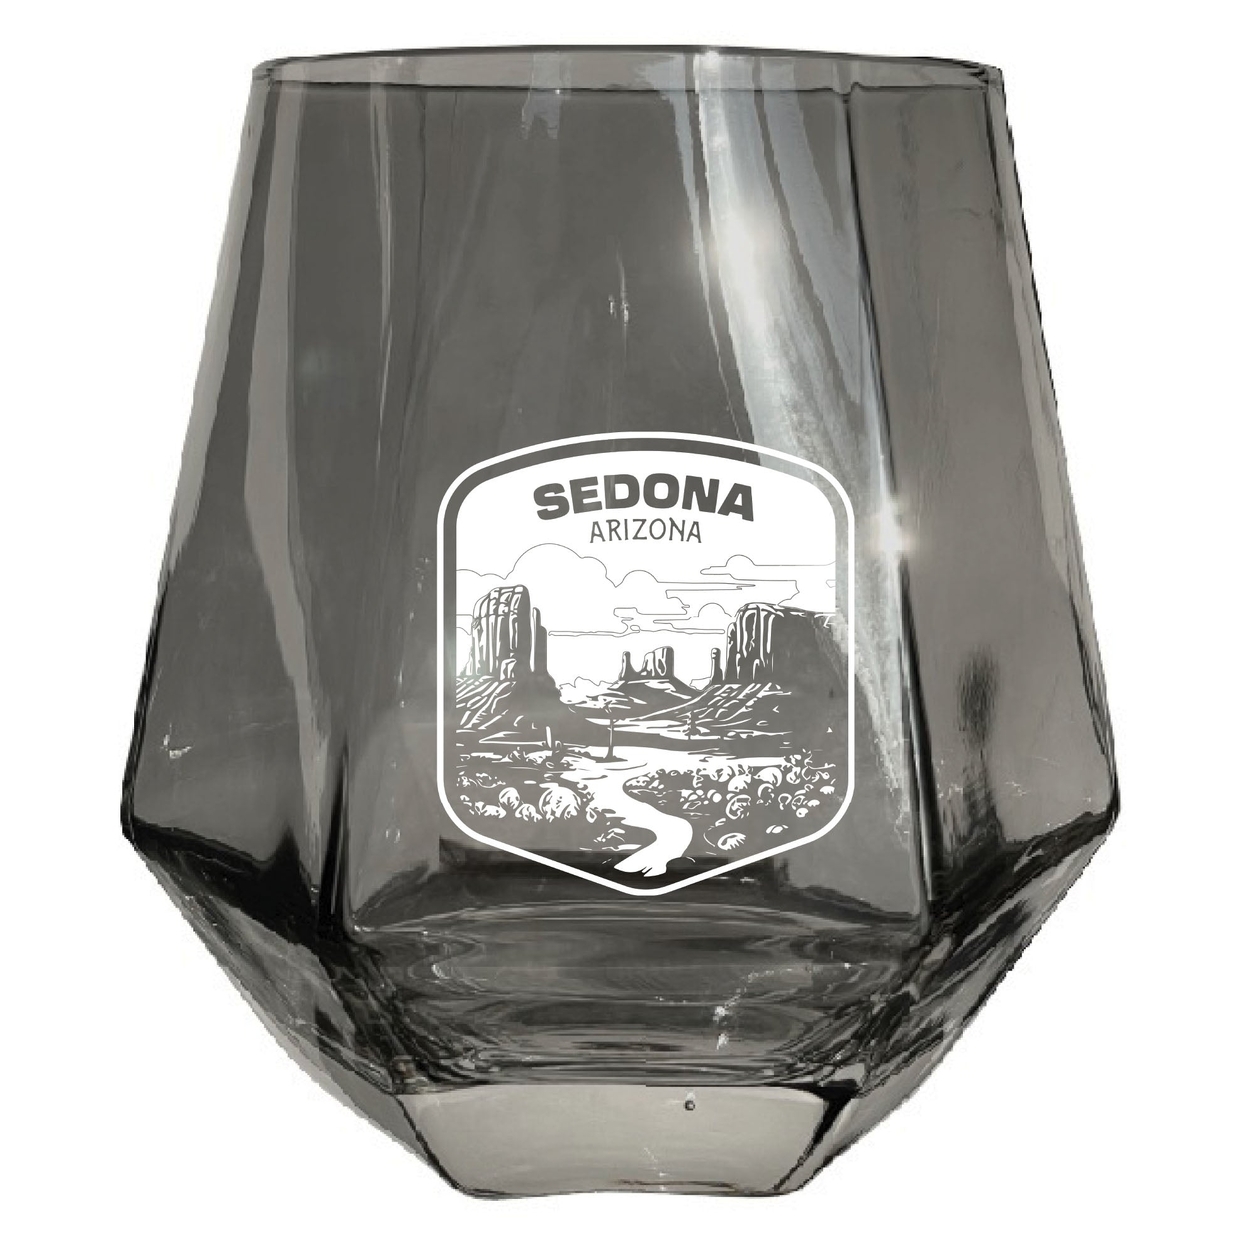 Sedona Arizona Souvenir Wine Glass EngravedDiamond 15 Oz Clear Iridescent - Gray,,4-Pack